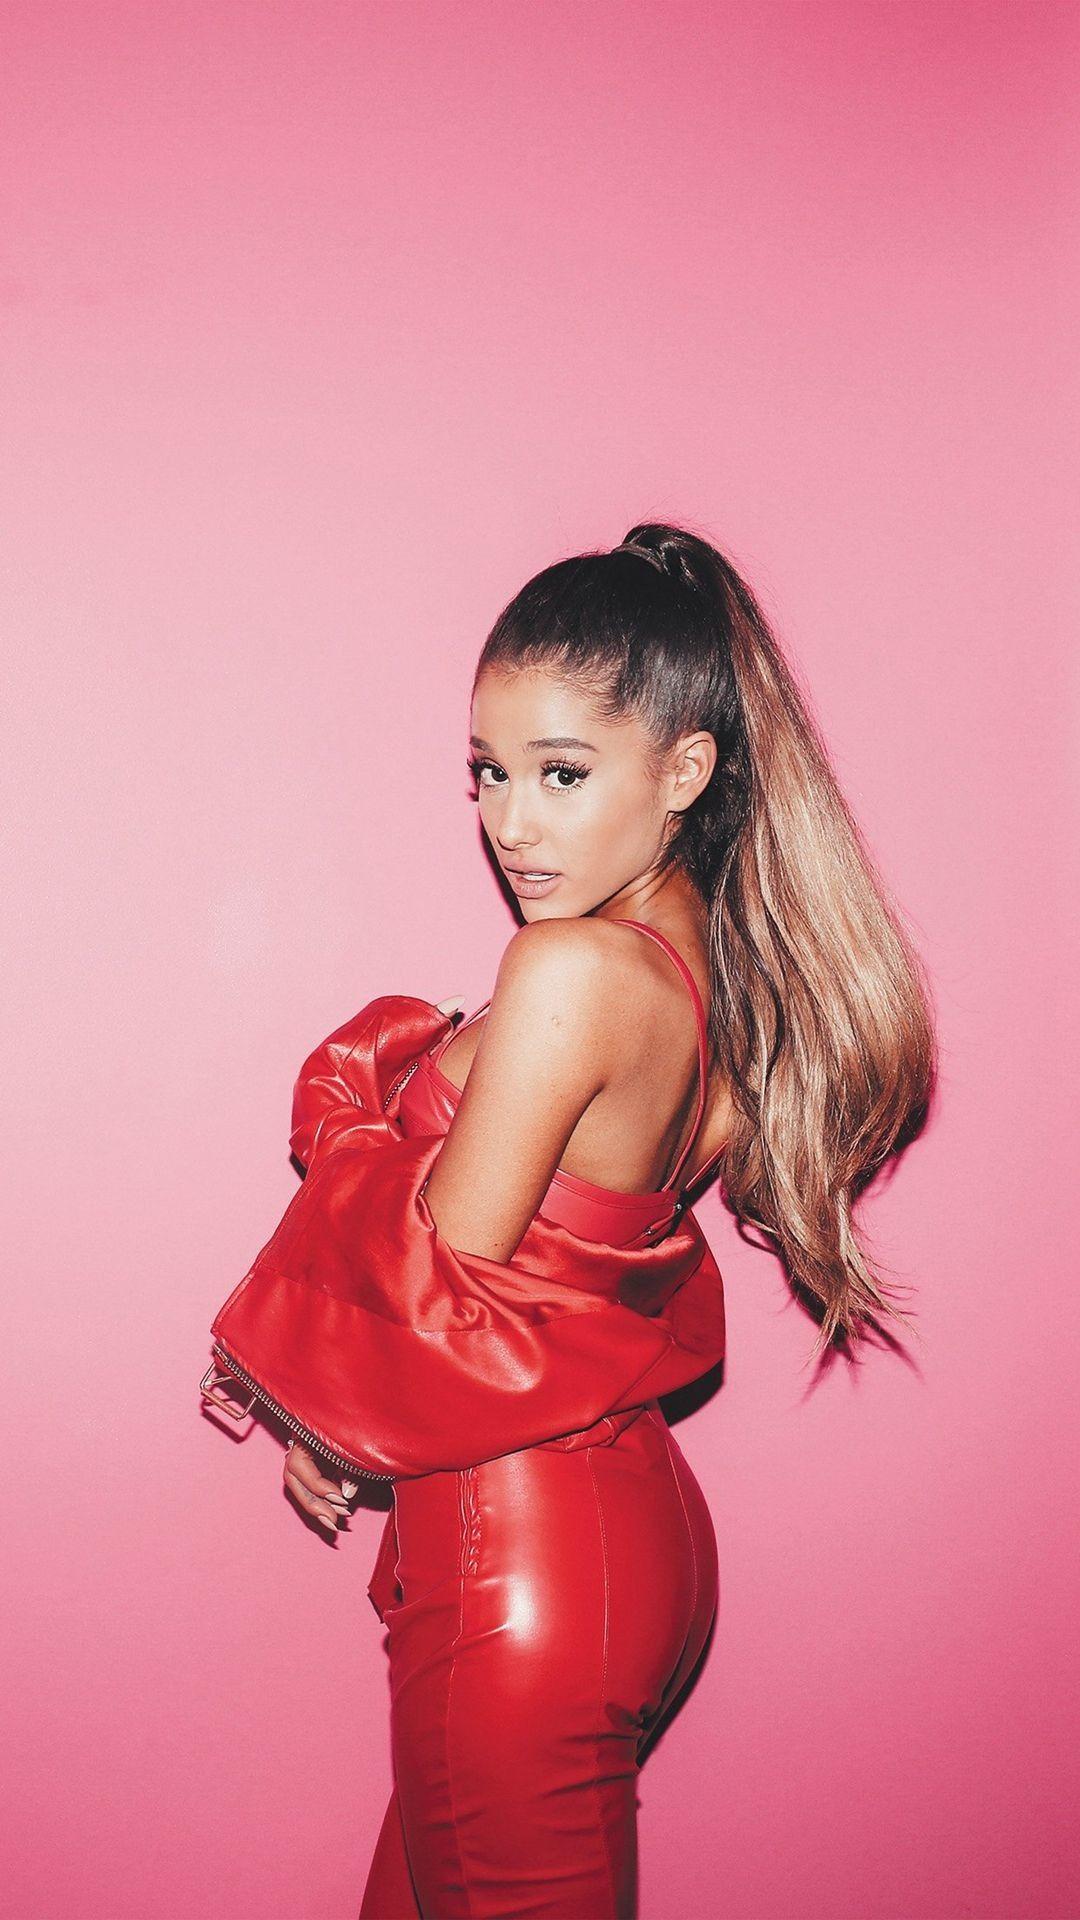 1080 x 1920 · jpeg - 1080x1920 Ariana Grande Pink Pose Music Girl iPhone 6 wallpaper | Tapety